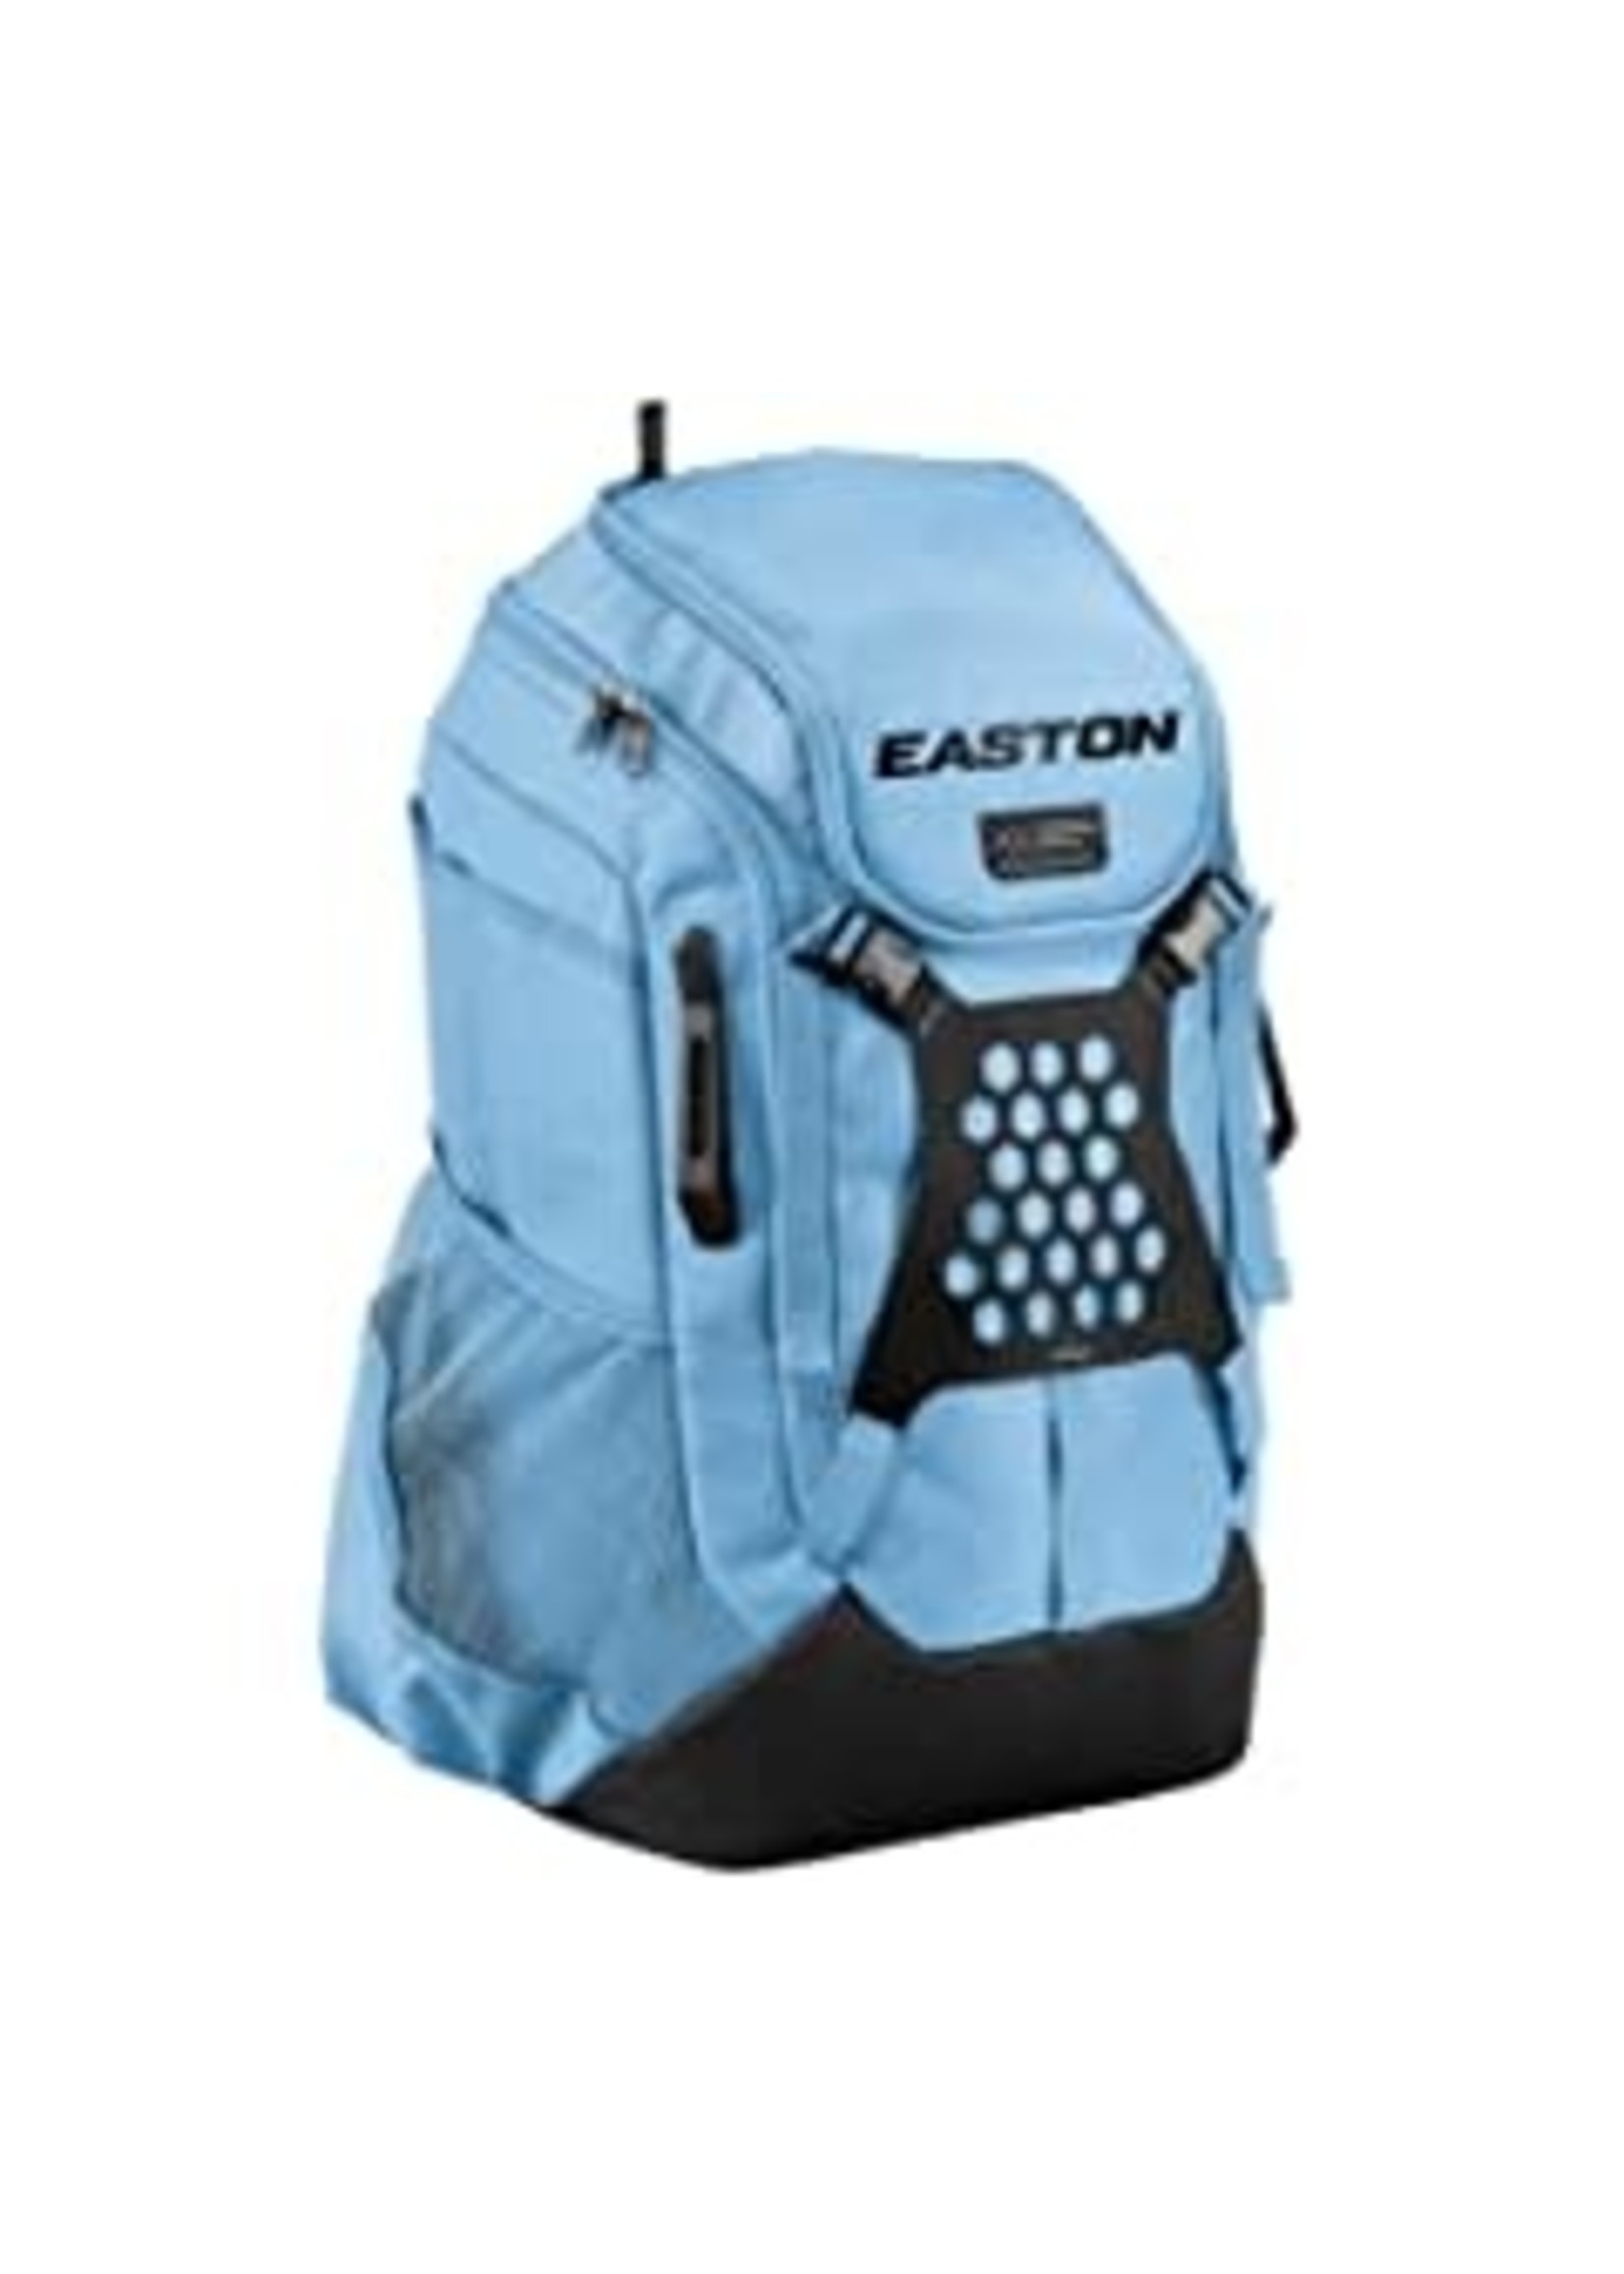 EASTON EASTON BACKPACK WALK-OFF NX